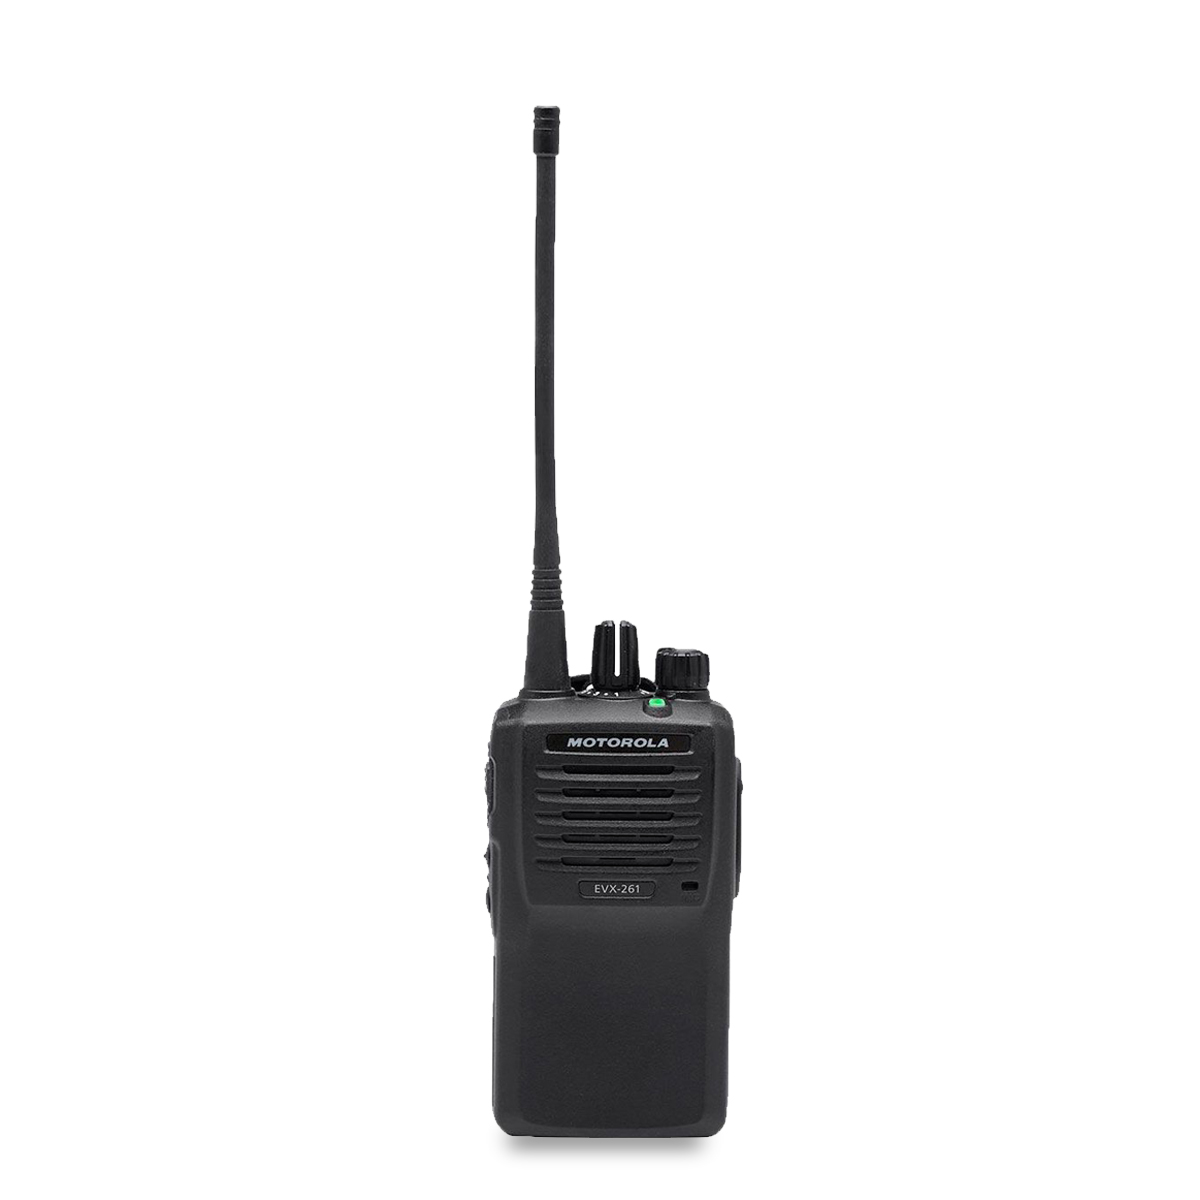 Radio Motorola EVX-261 Digital EVX-261-G7 UHF 450-512 MHz